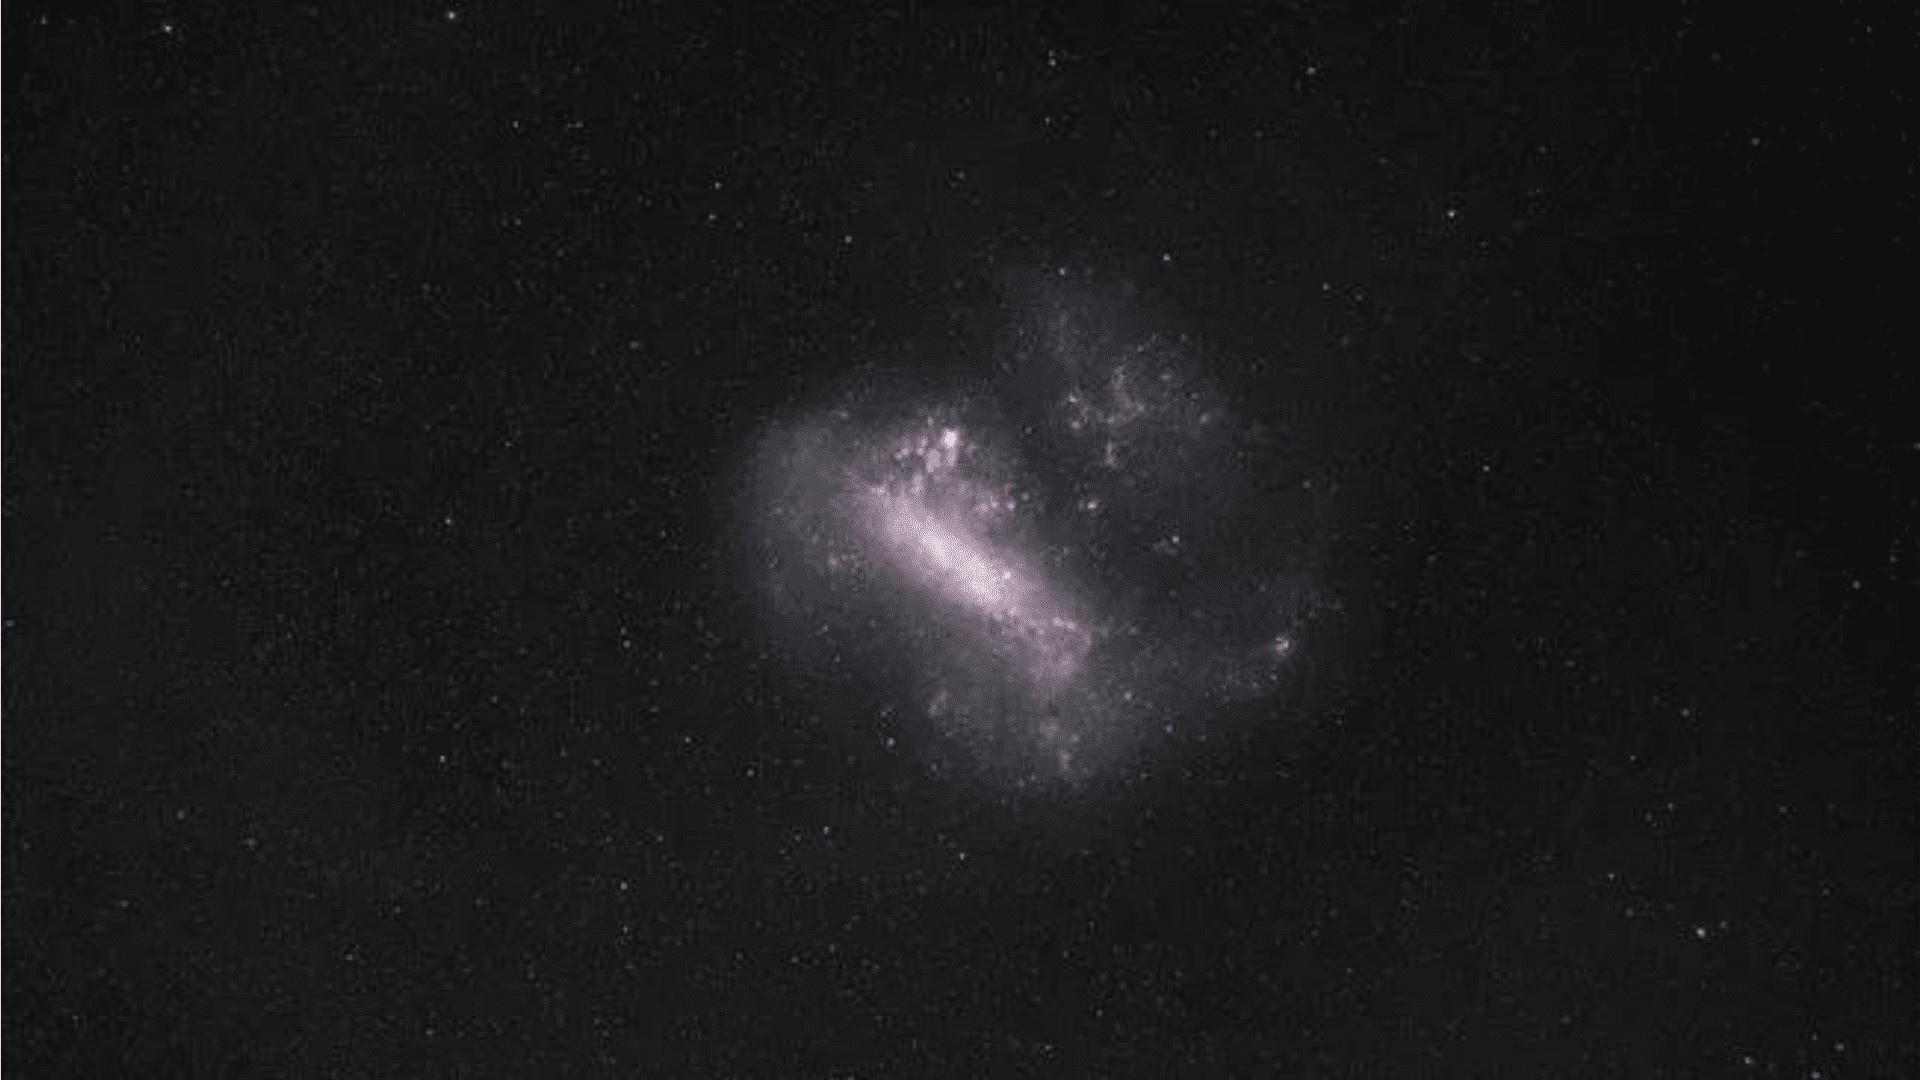 A telescope image of the Large Magellanic Cloud